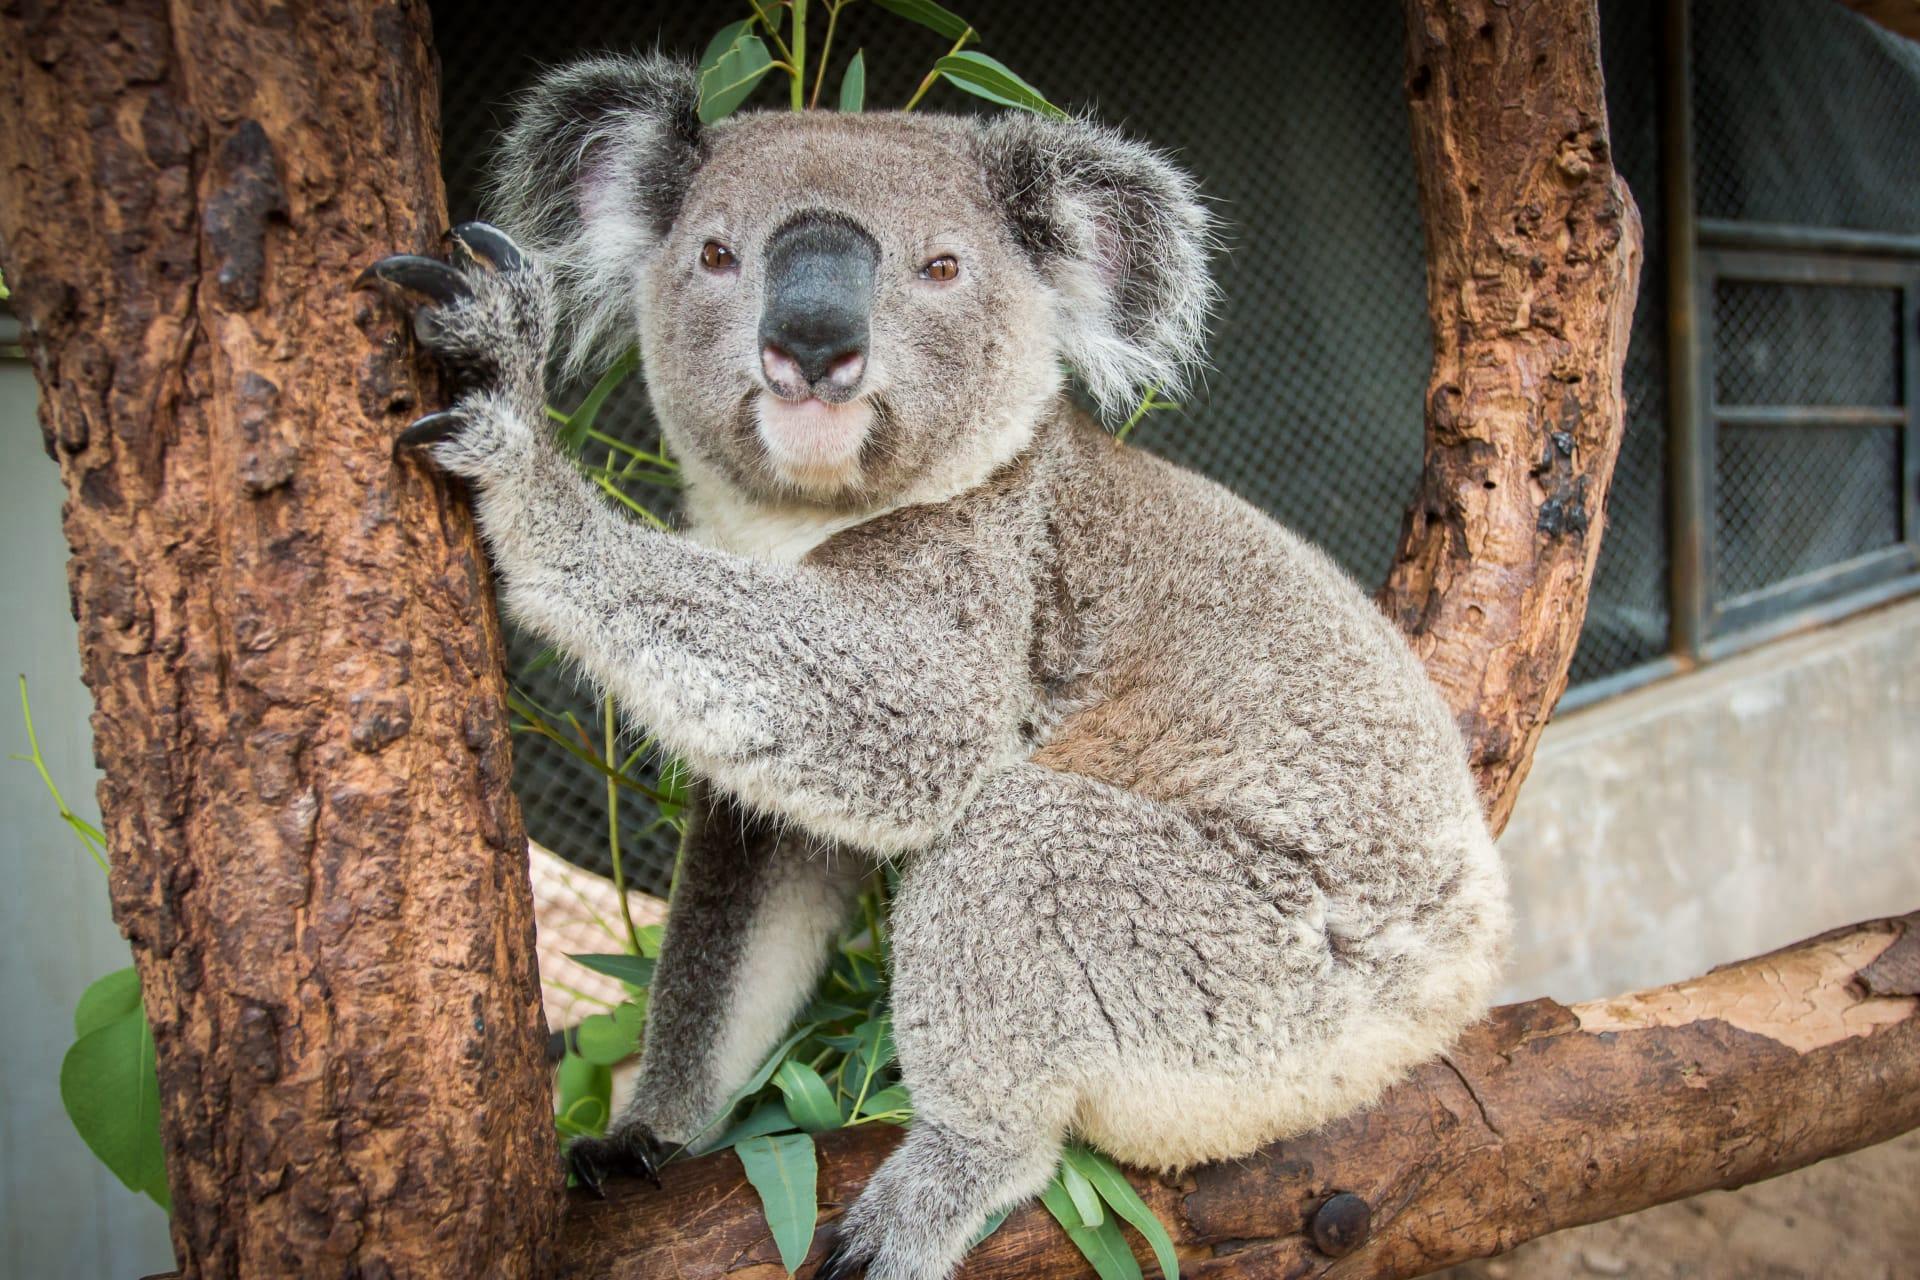 Koala pictures